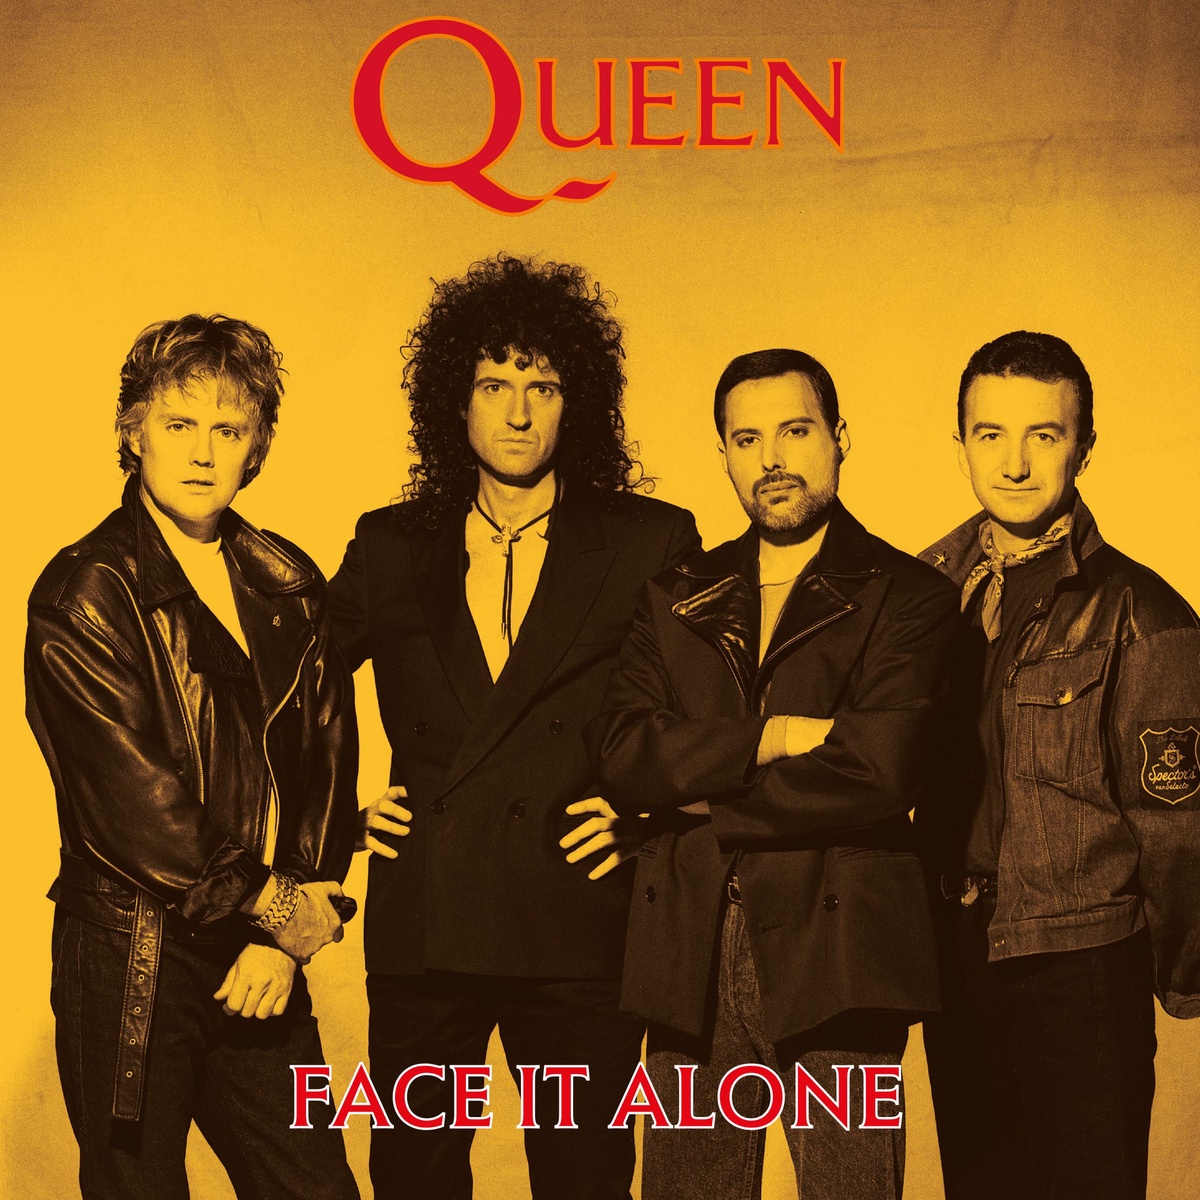 QUEEN วงร็อกระดับตำนาน เซอร์ไพรส์ปล่อยเพลงใหม่ Face It Alone พร้อมเสียงร้องของ Freddie Mercury นักร้องนำที่ได้บันทึกเสียงไว้ช่วงทำอัลบั้ม The Miracle ในปี